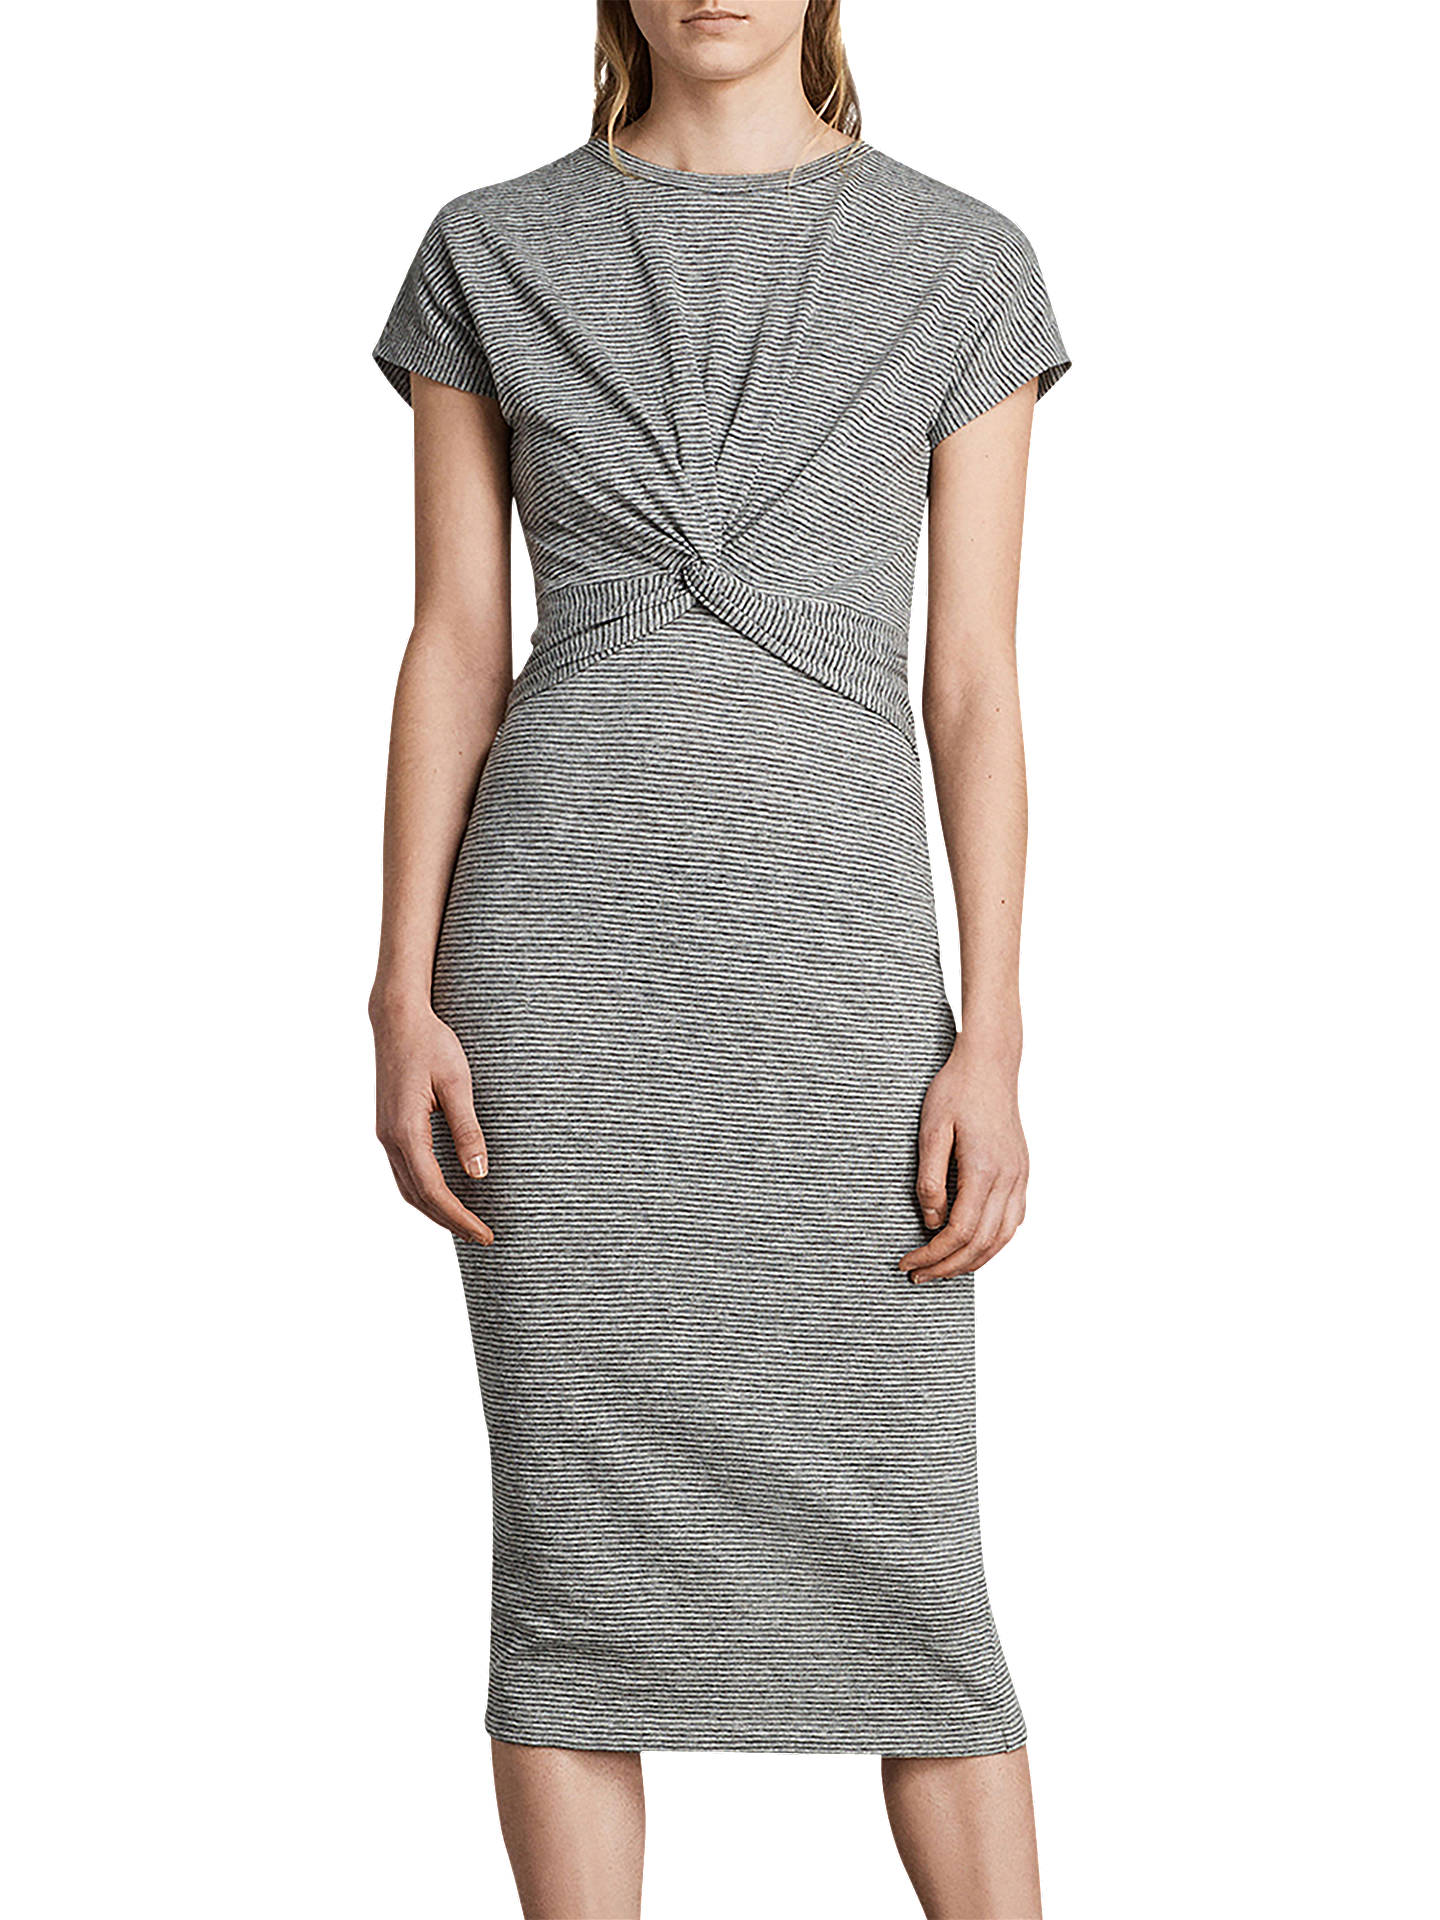 AllSaints Paloma Long Stripe Dress, Charcoal Grey at John Lewis & Partners